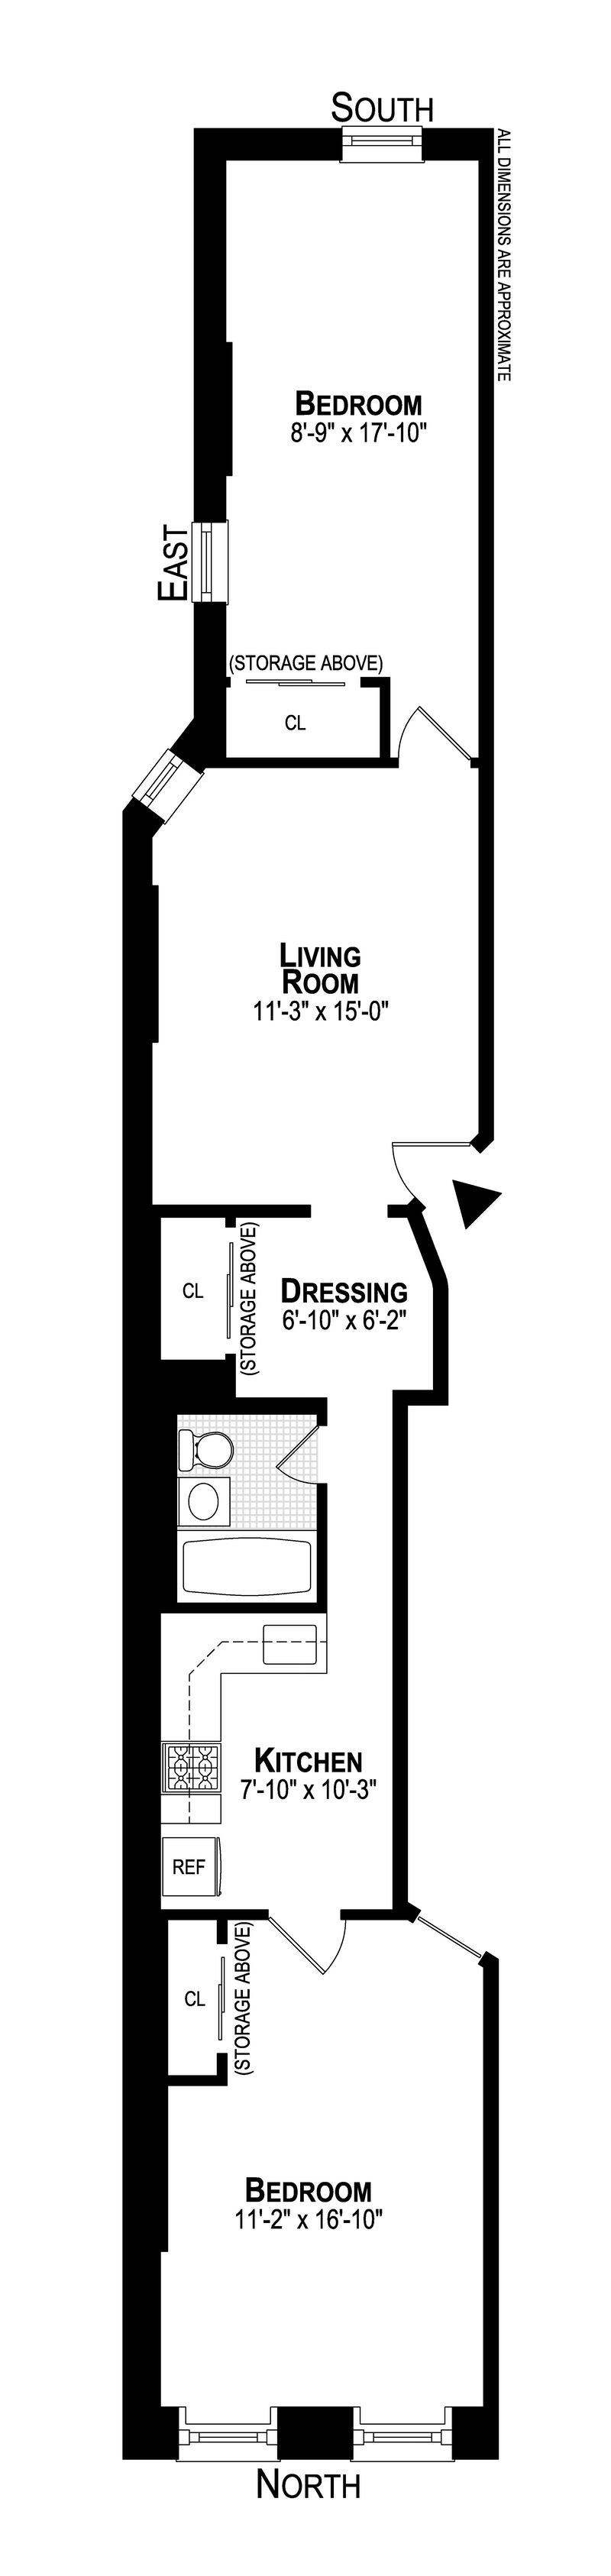 Floorplan for 108 West 17th Street, 6